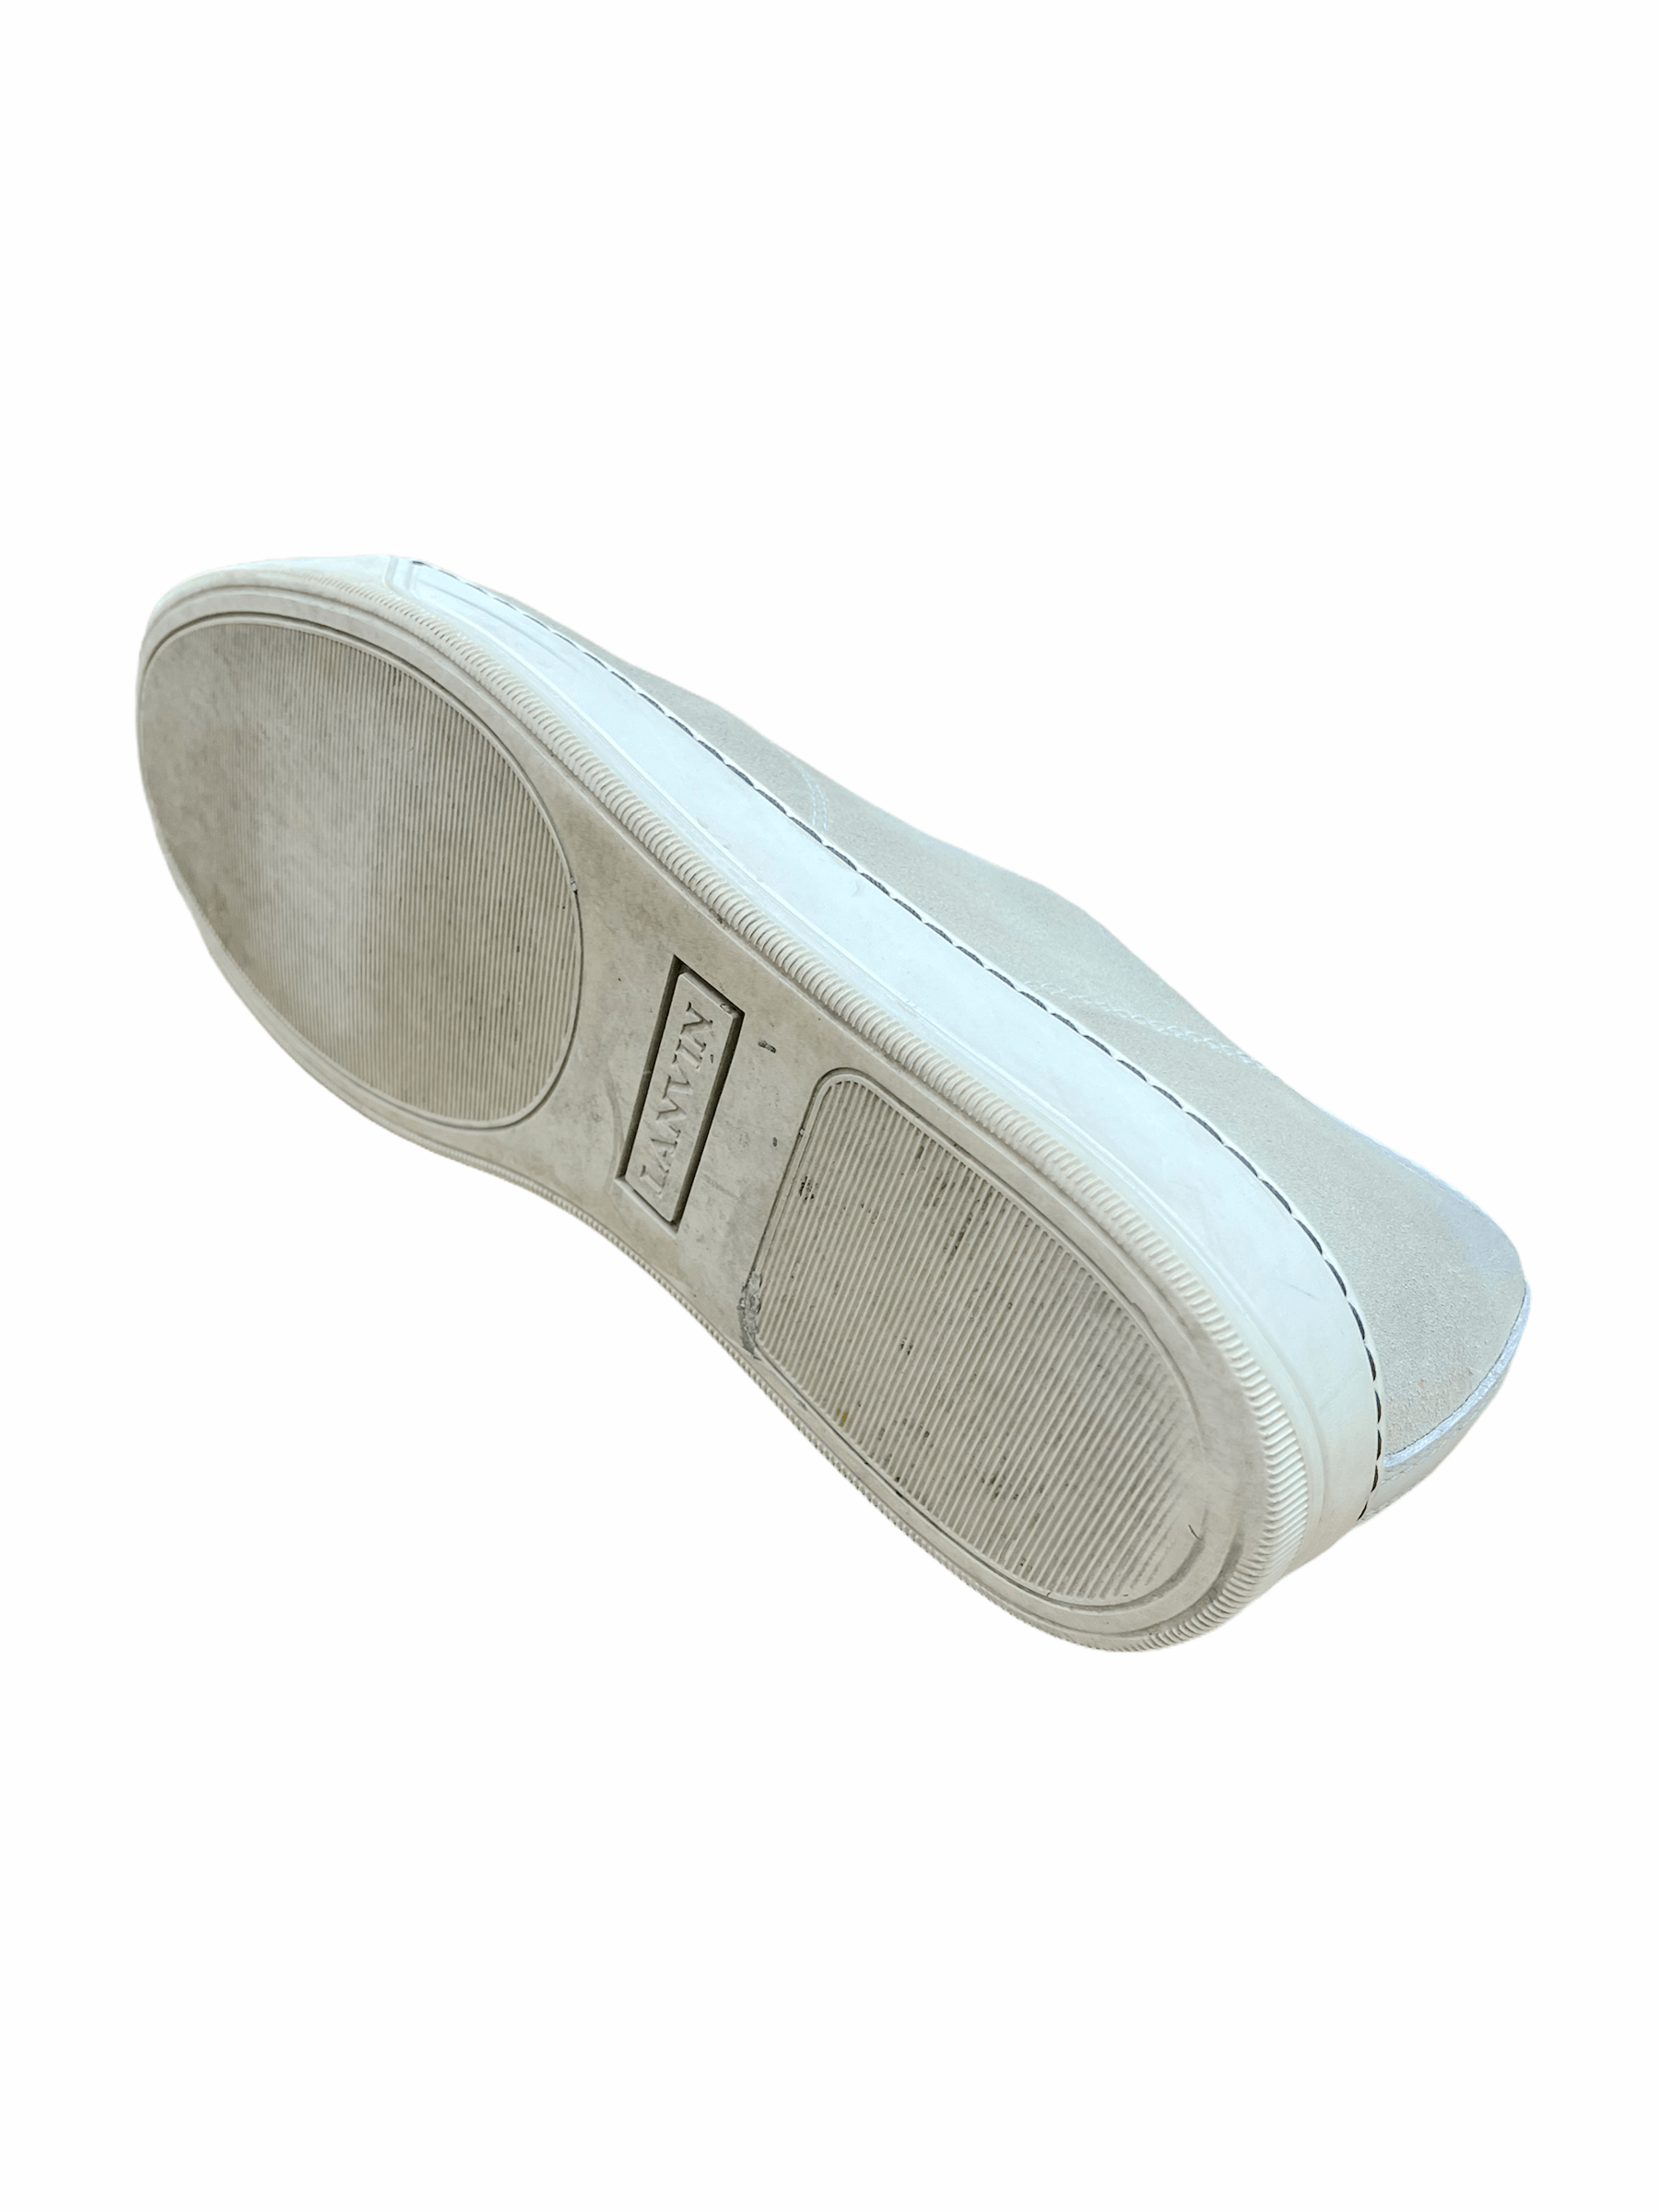 Lanvin Paris Off White Tan Suede Leather Sneakers 8US—Genuine Design luxury consignment 